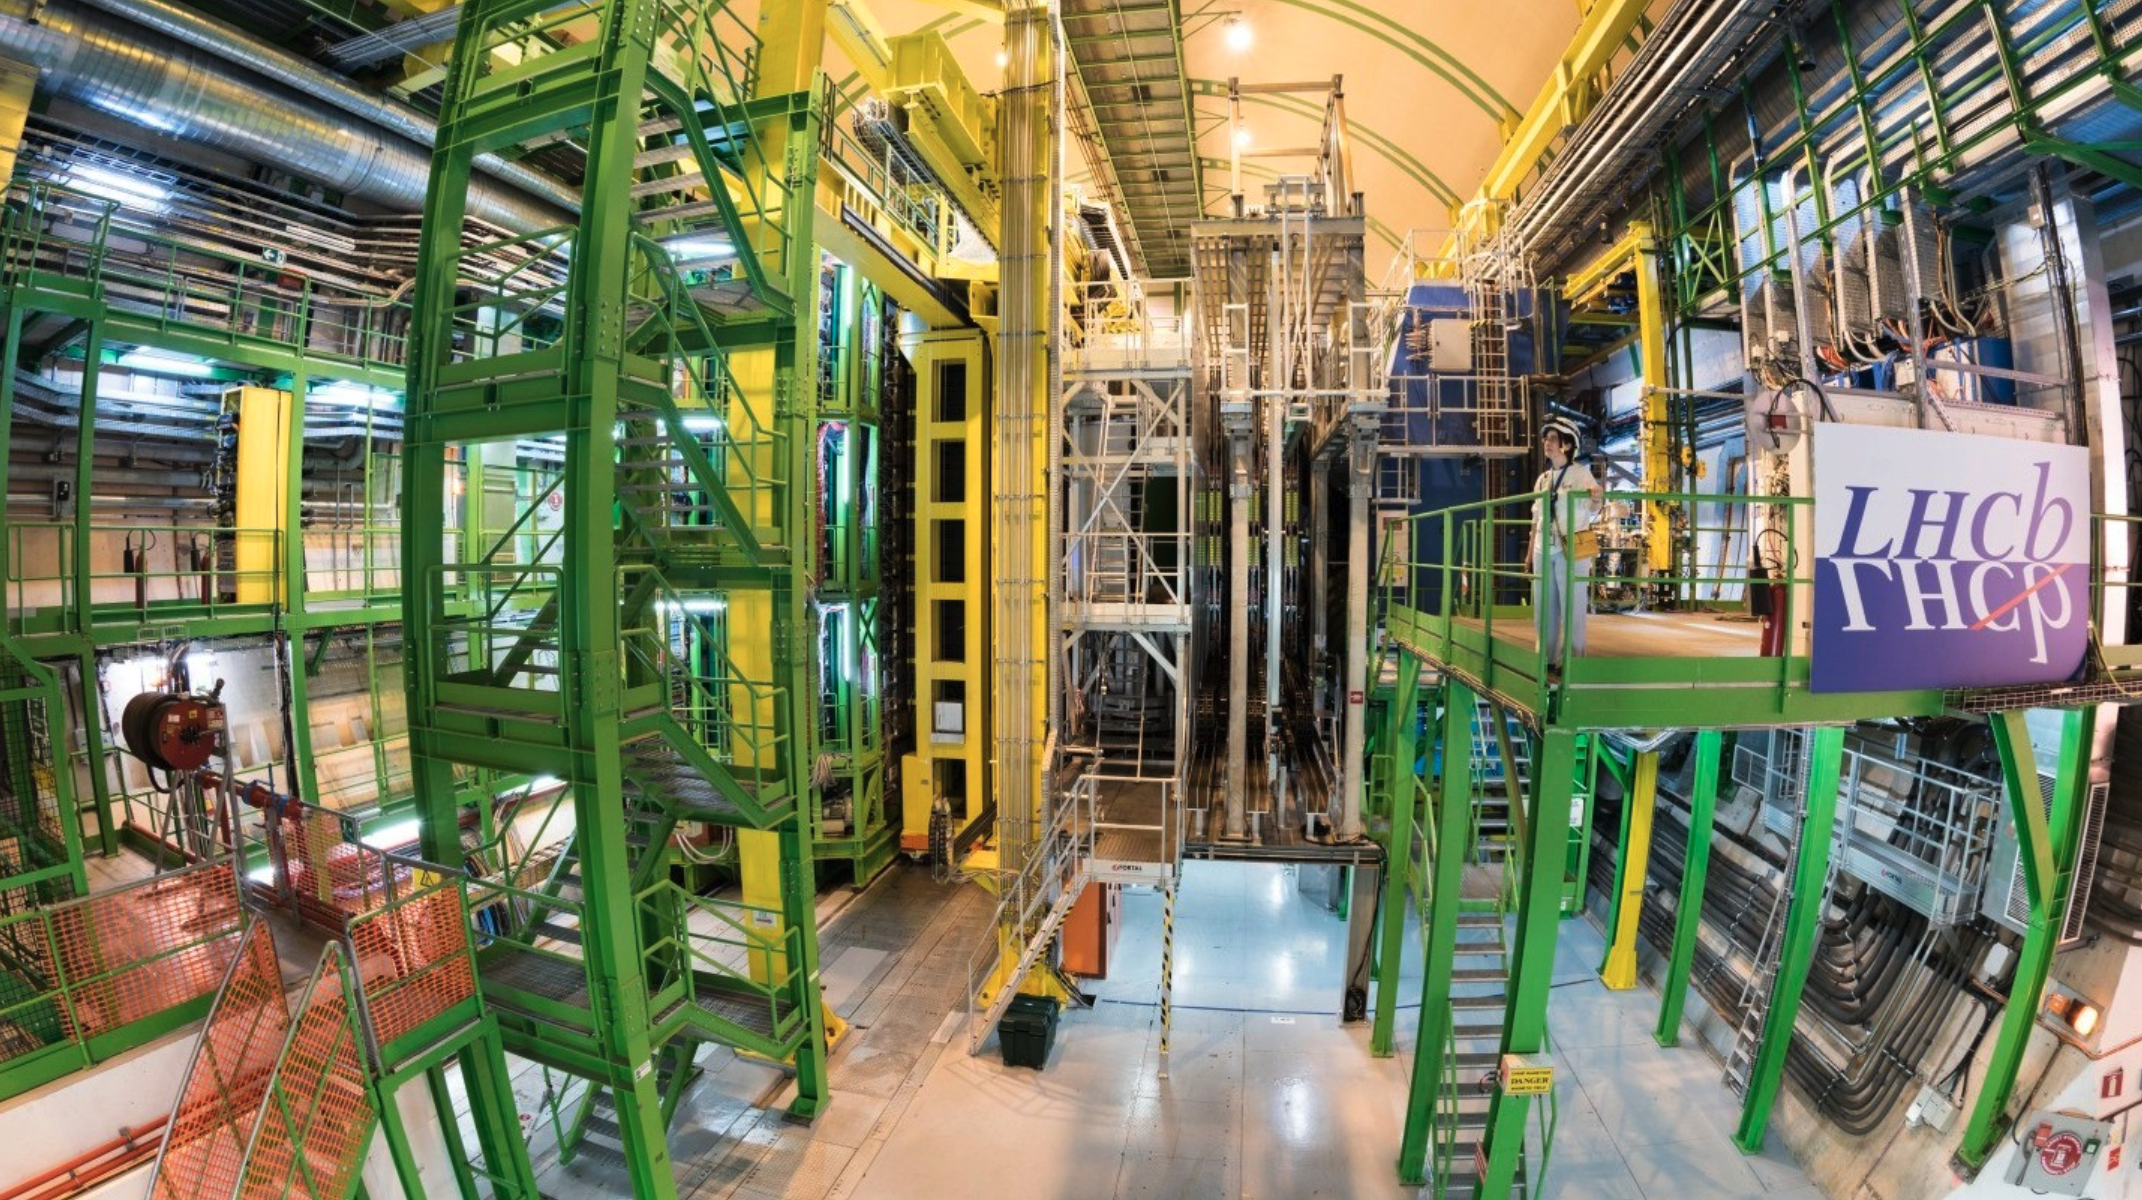 The LHCb Experimental Hall (Photo: CERN)